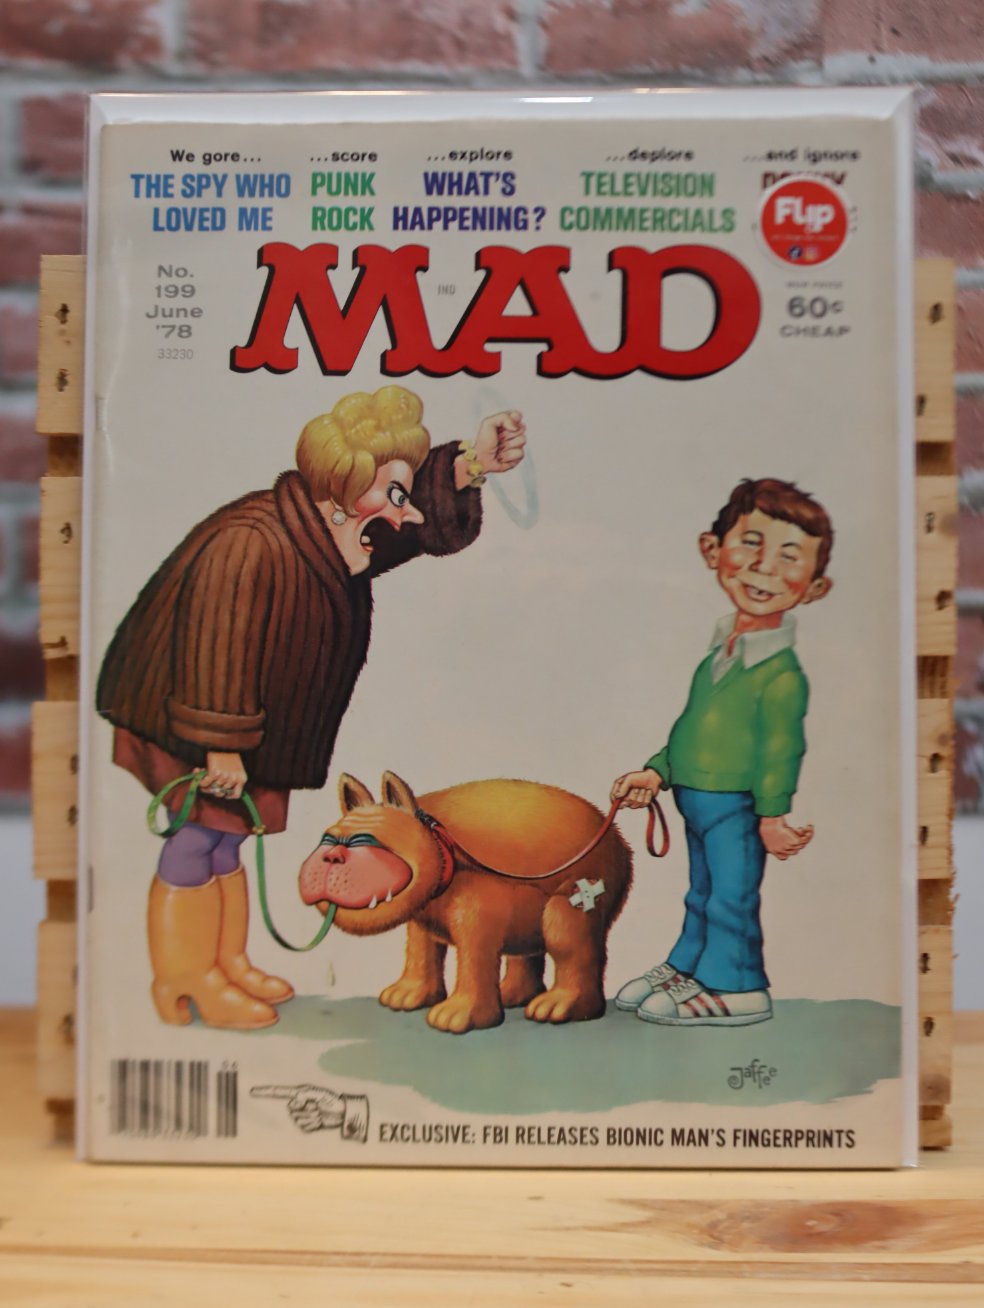 Original Vintage MAD Magazine Issue 199 (June 1978)